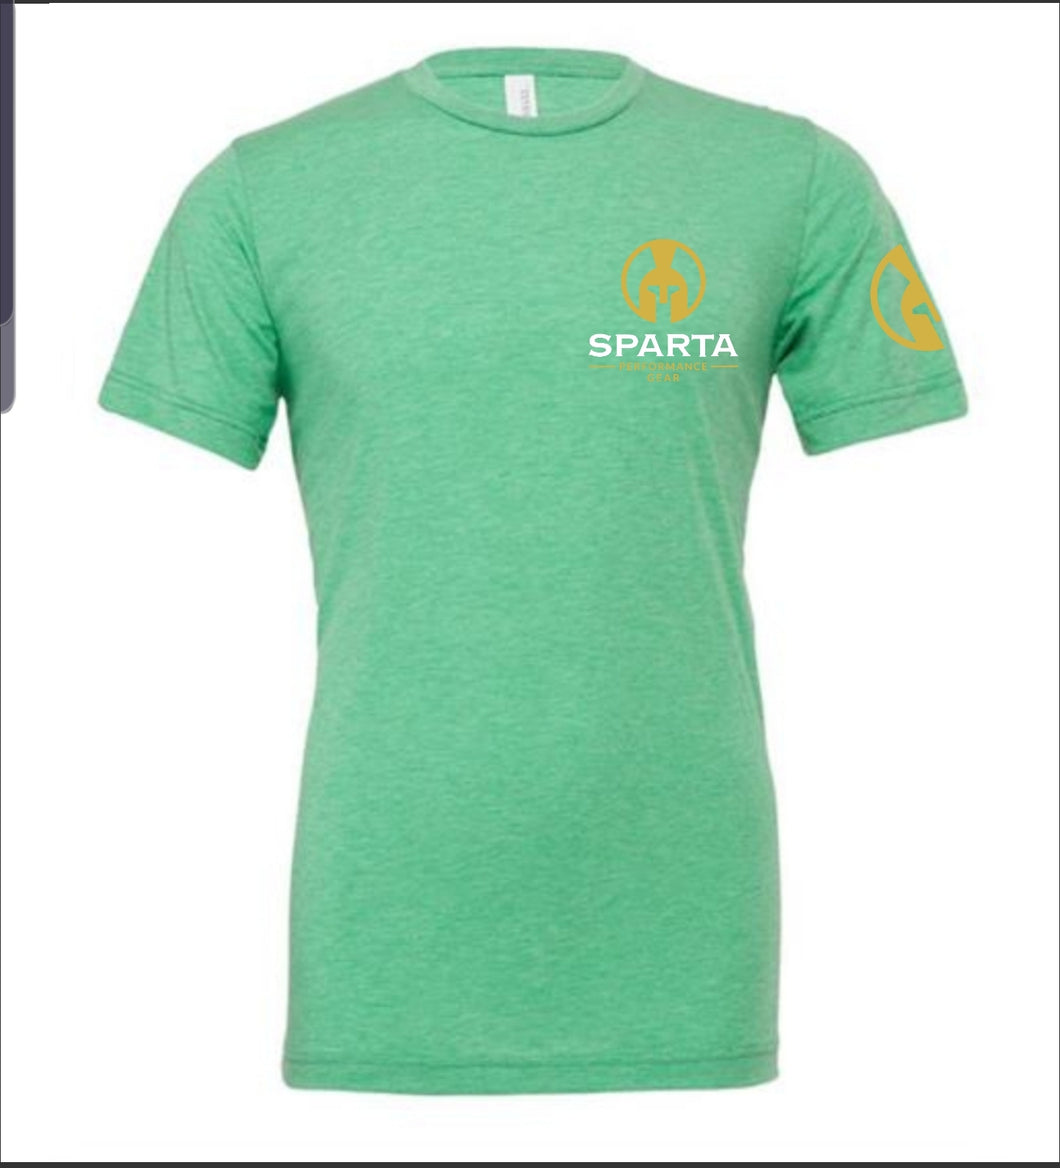 Unisex Irish Green Classic Triblend Tshirts